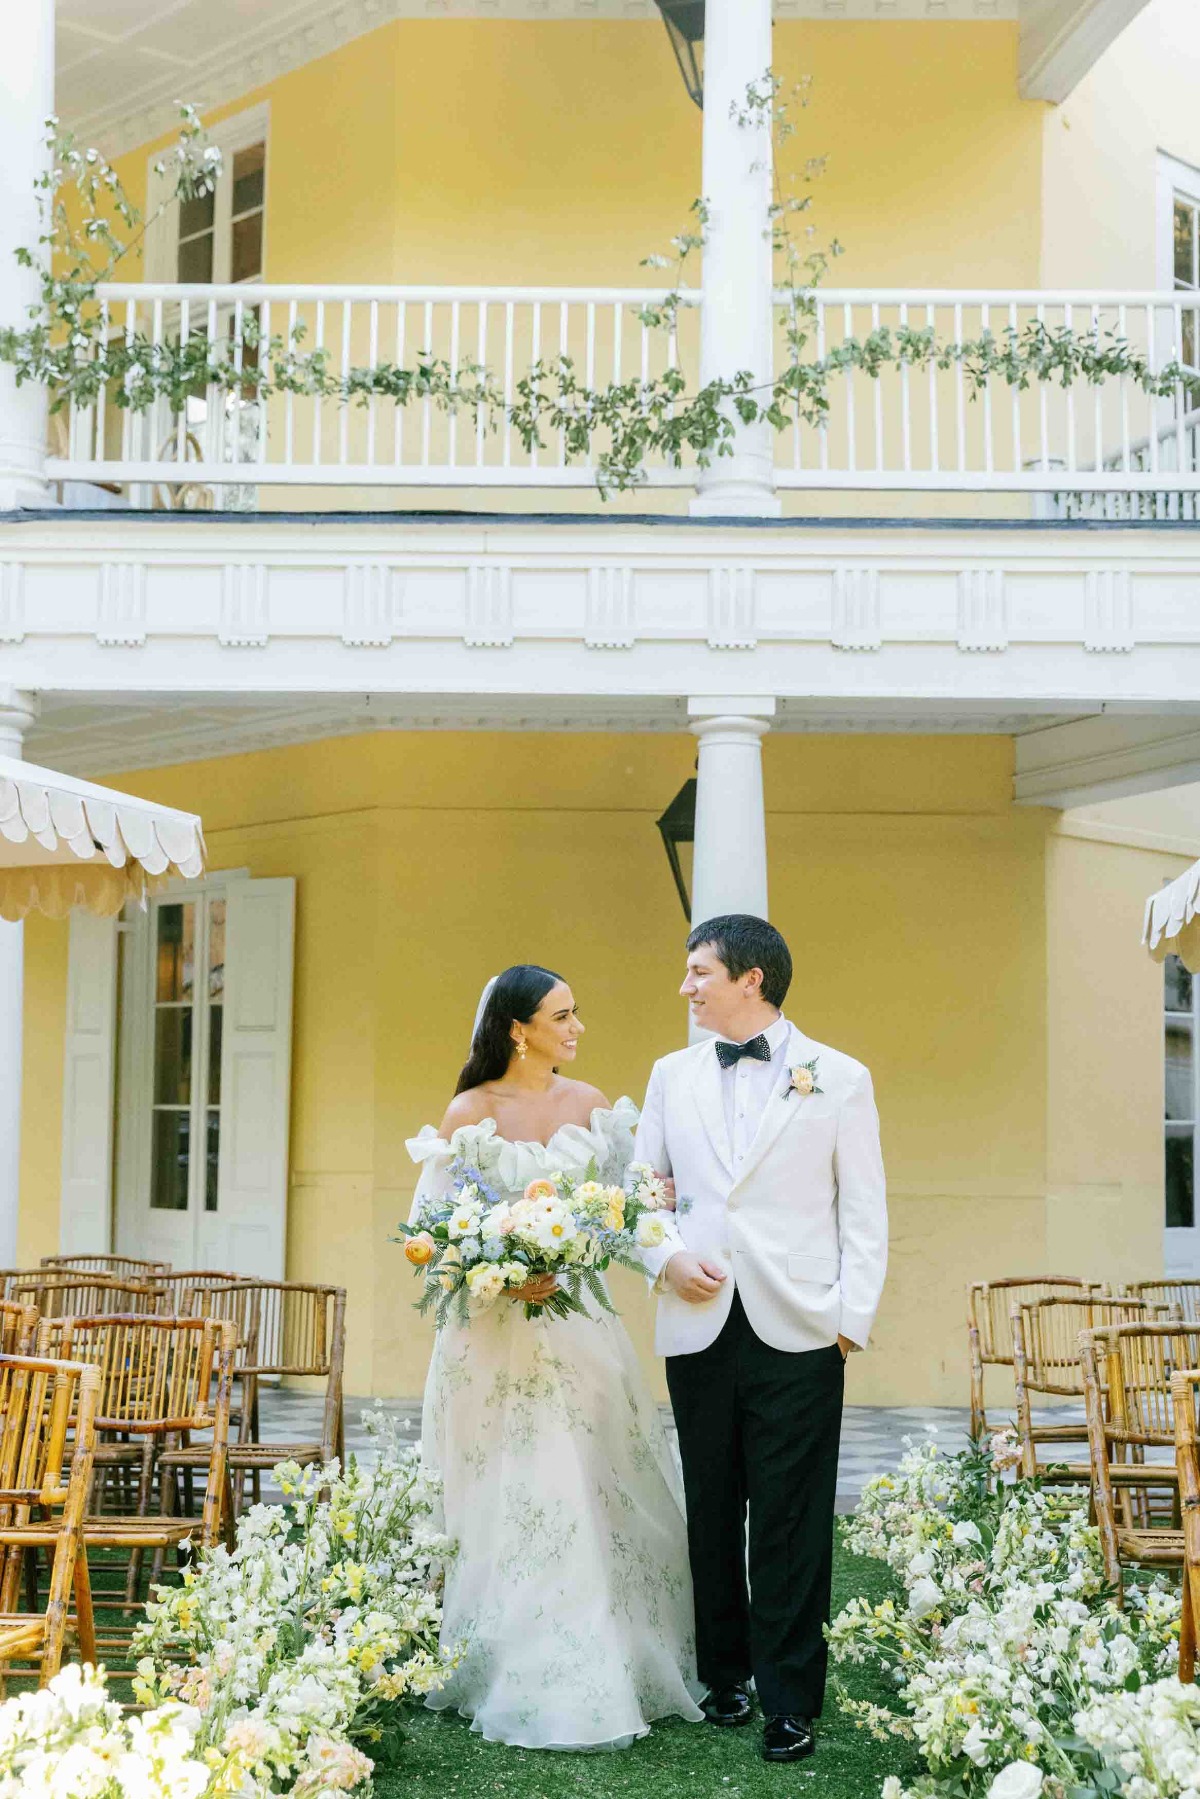 Charleston newlywed portraits at colorful garden venue